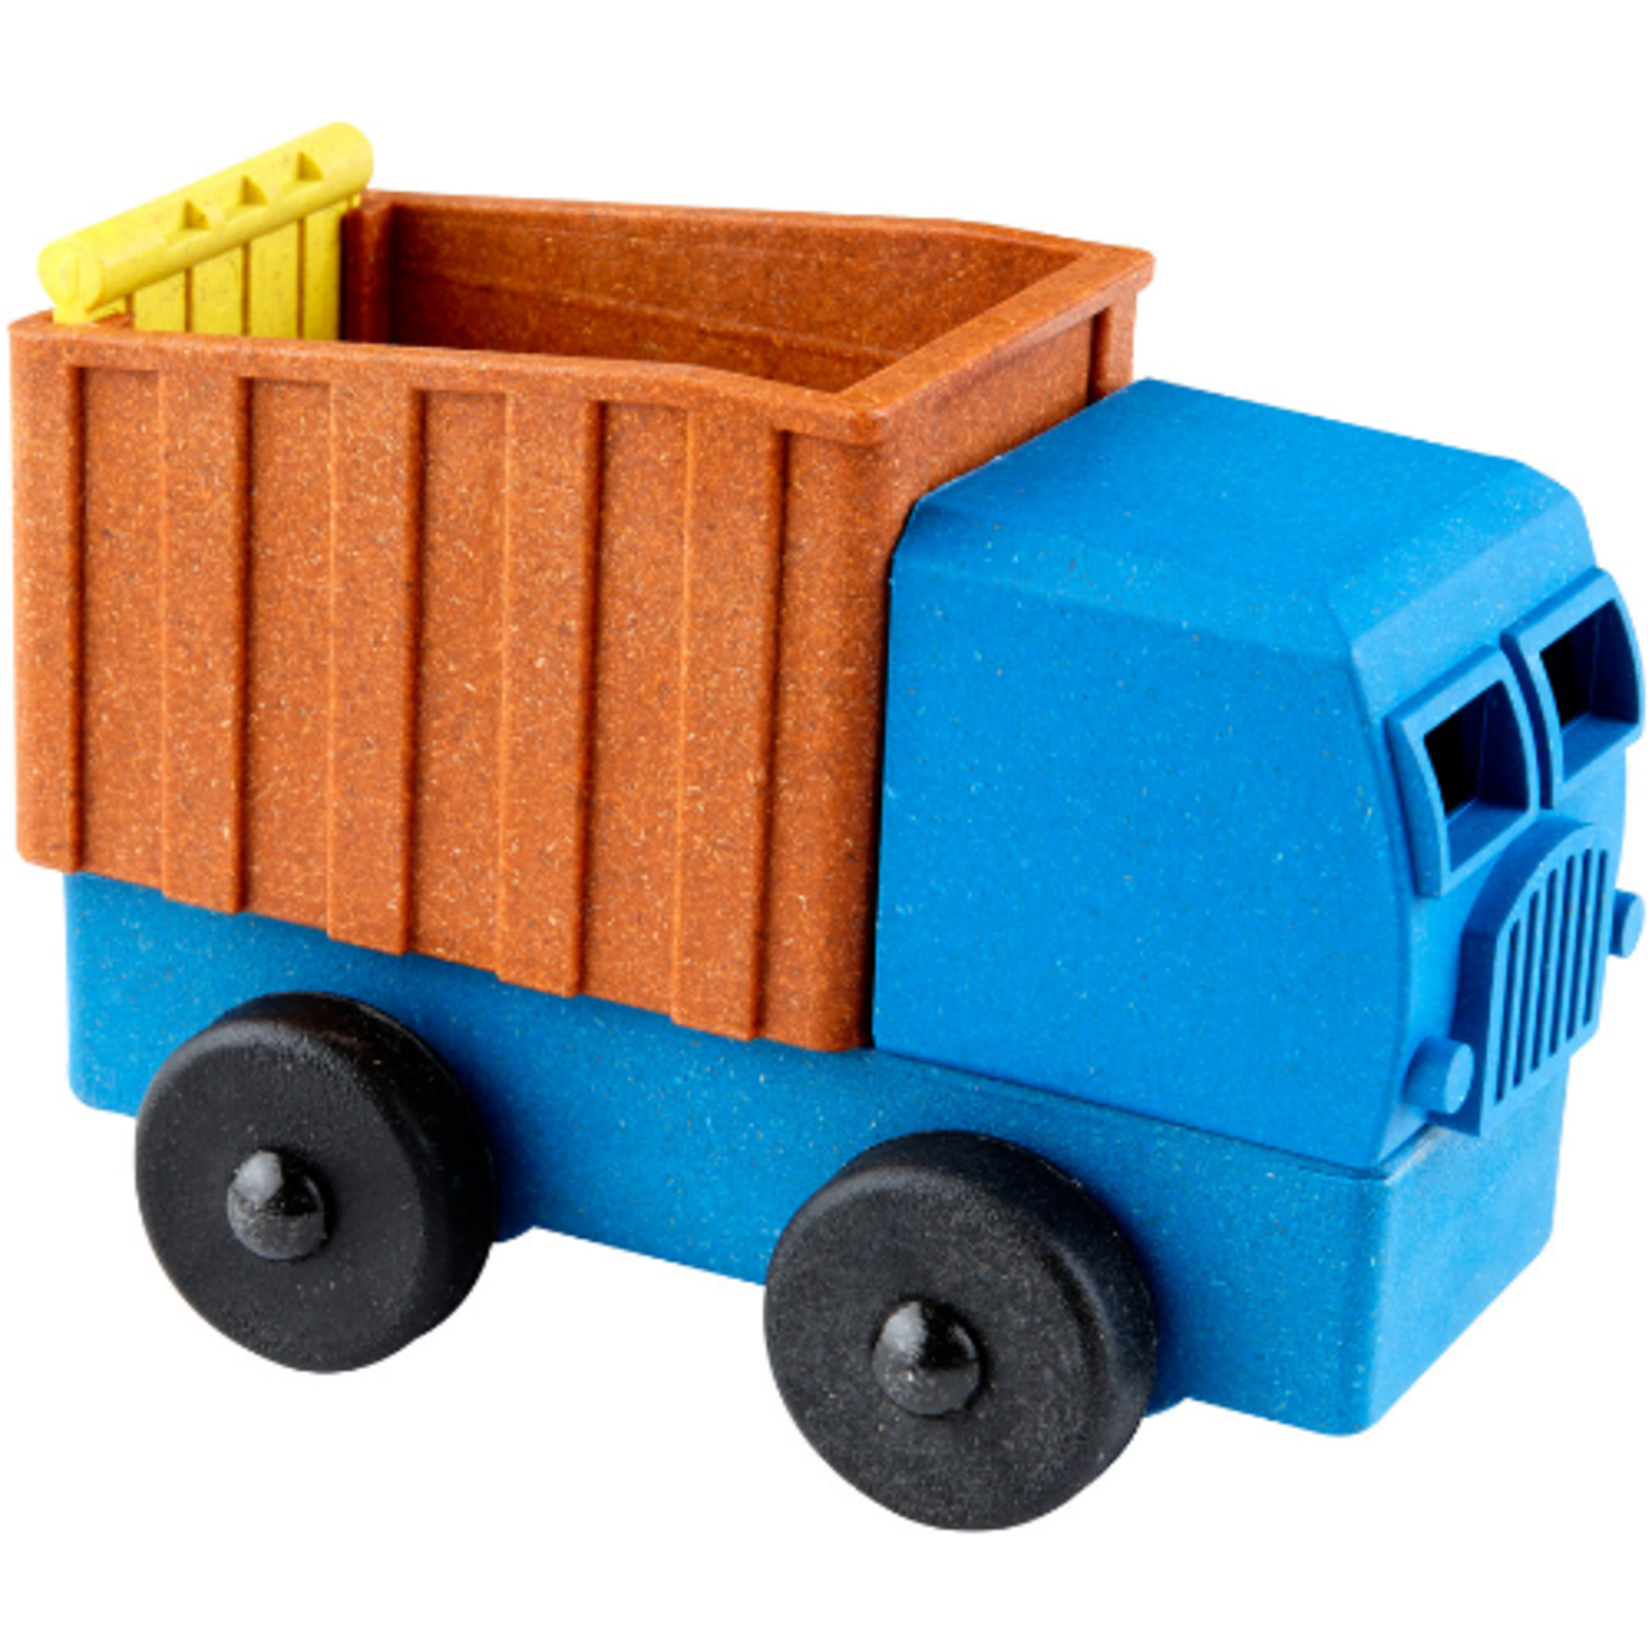 Luke’s Toy Factory Dump Truck